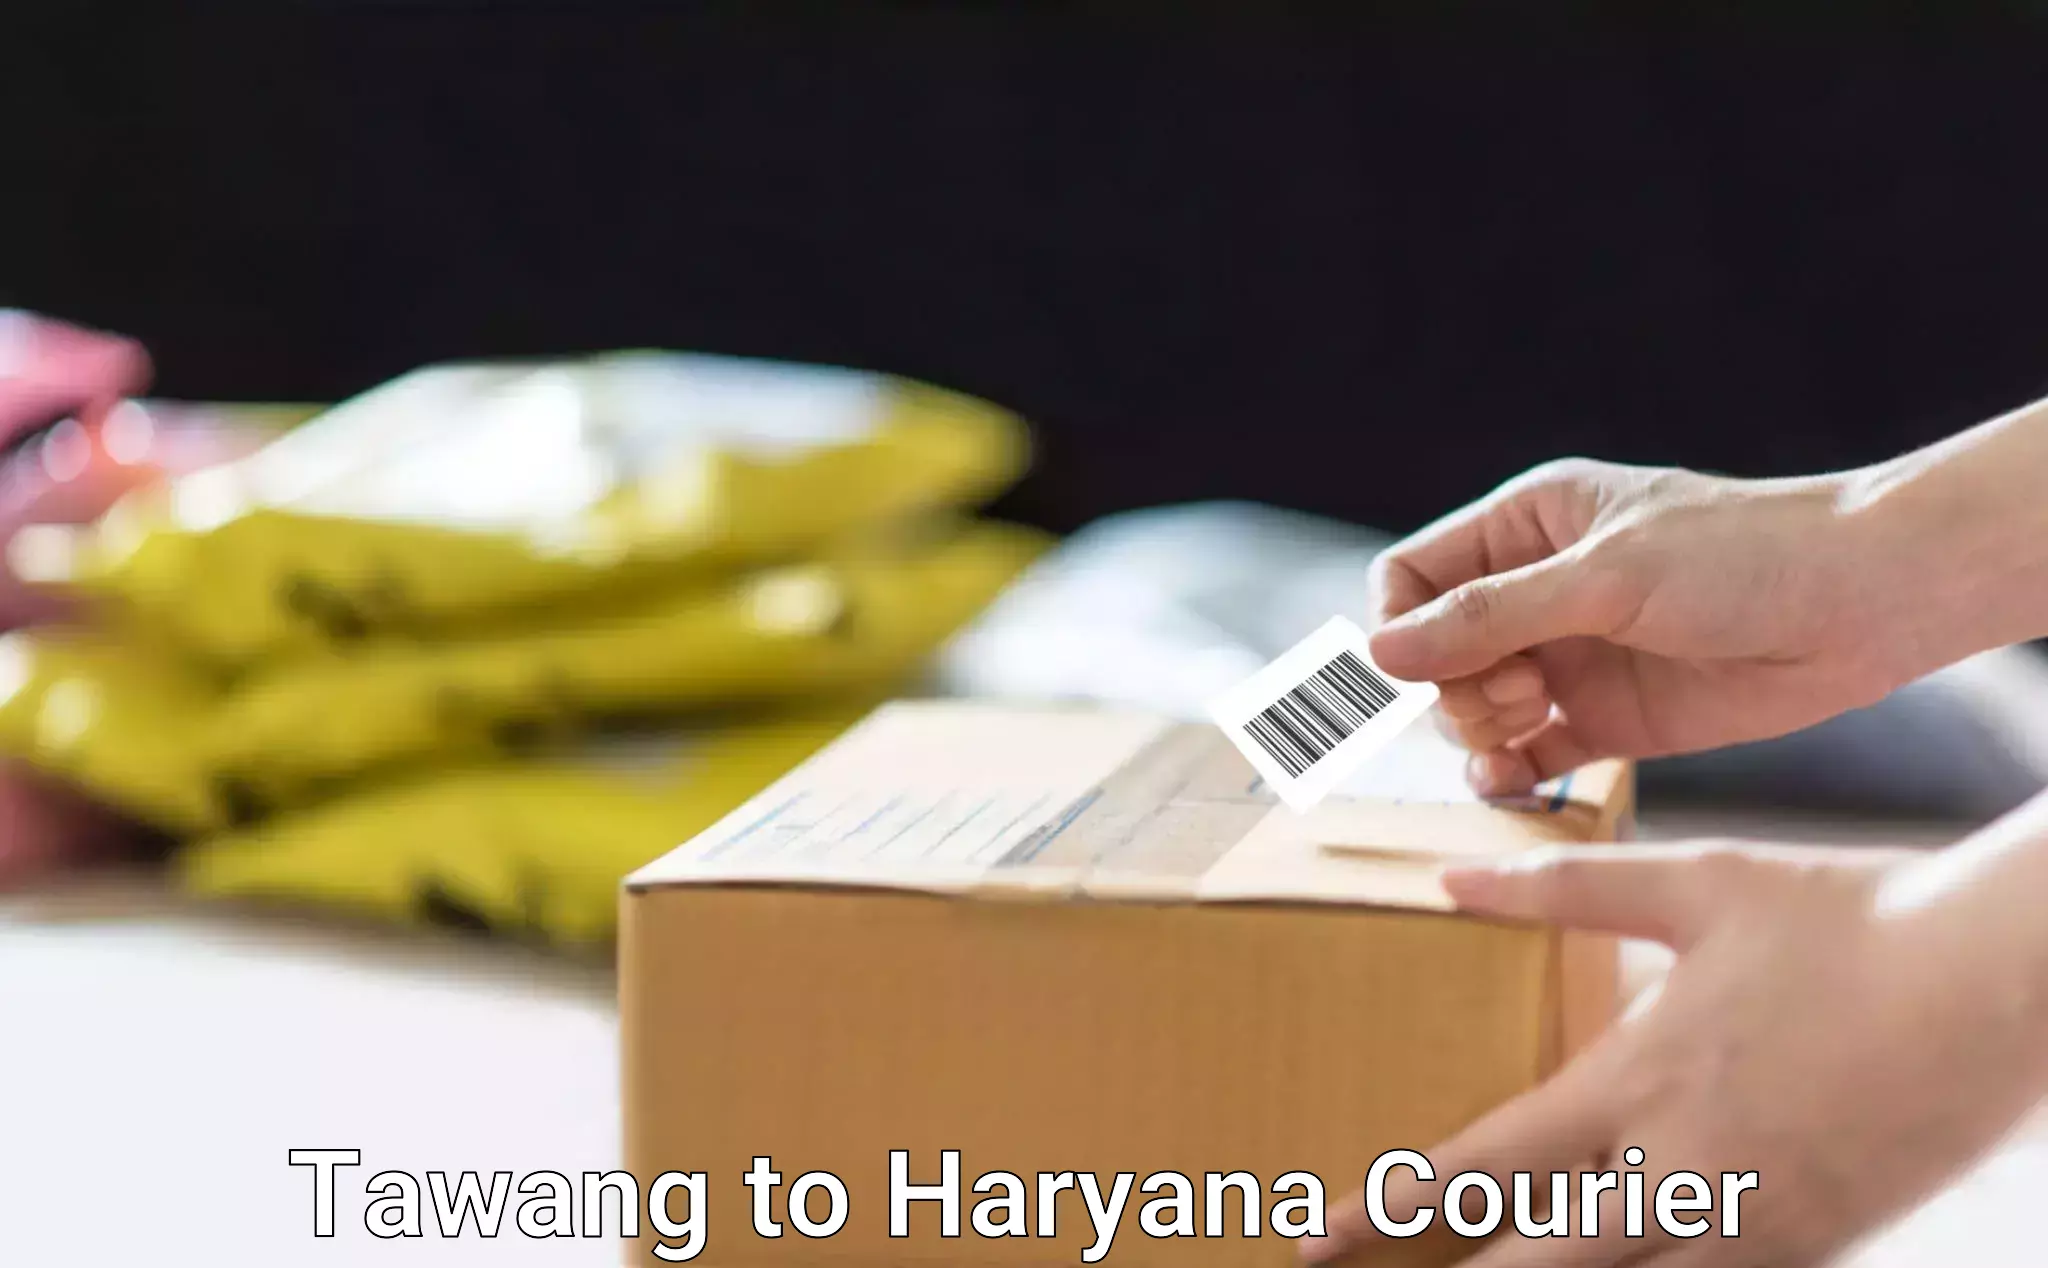 Professional courier handling Tawang to Bhiwani